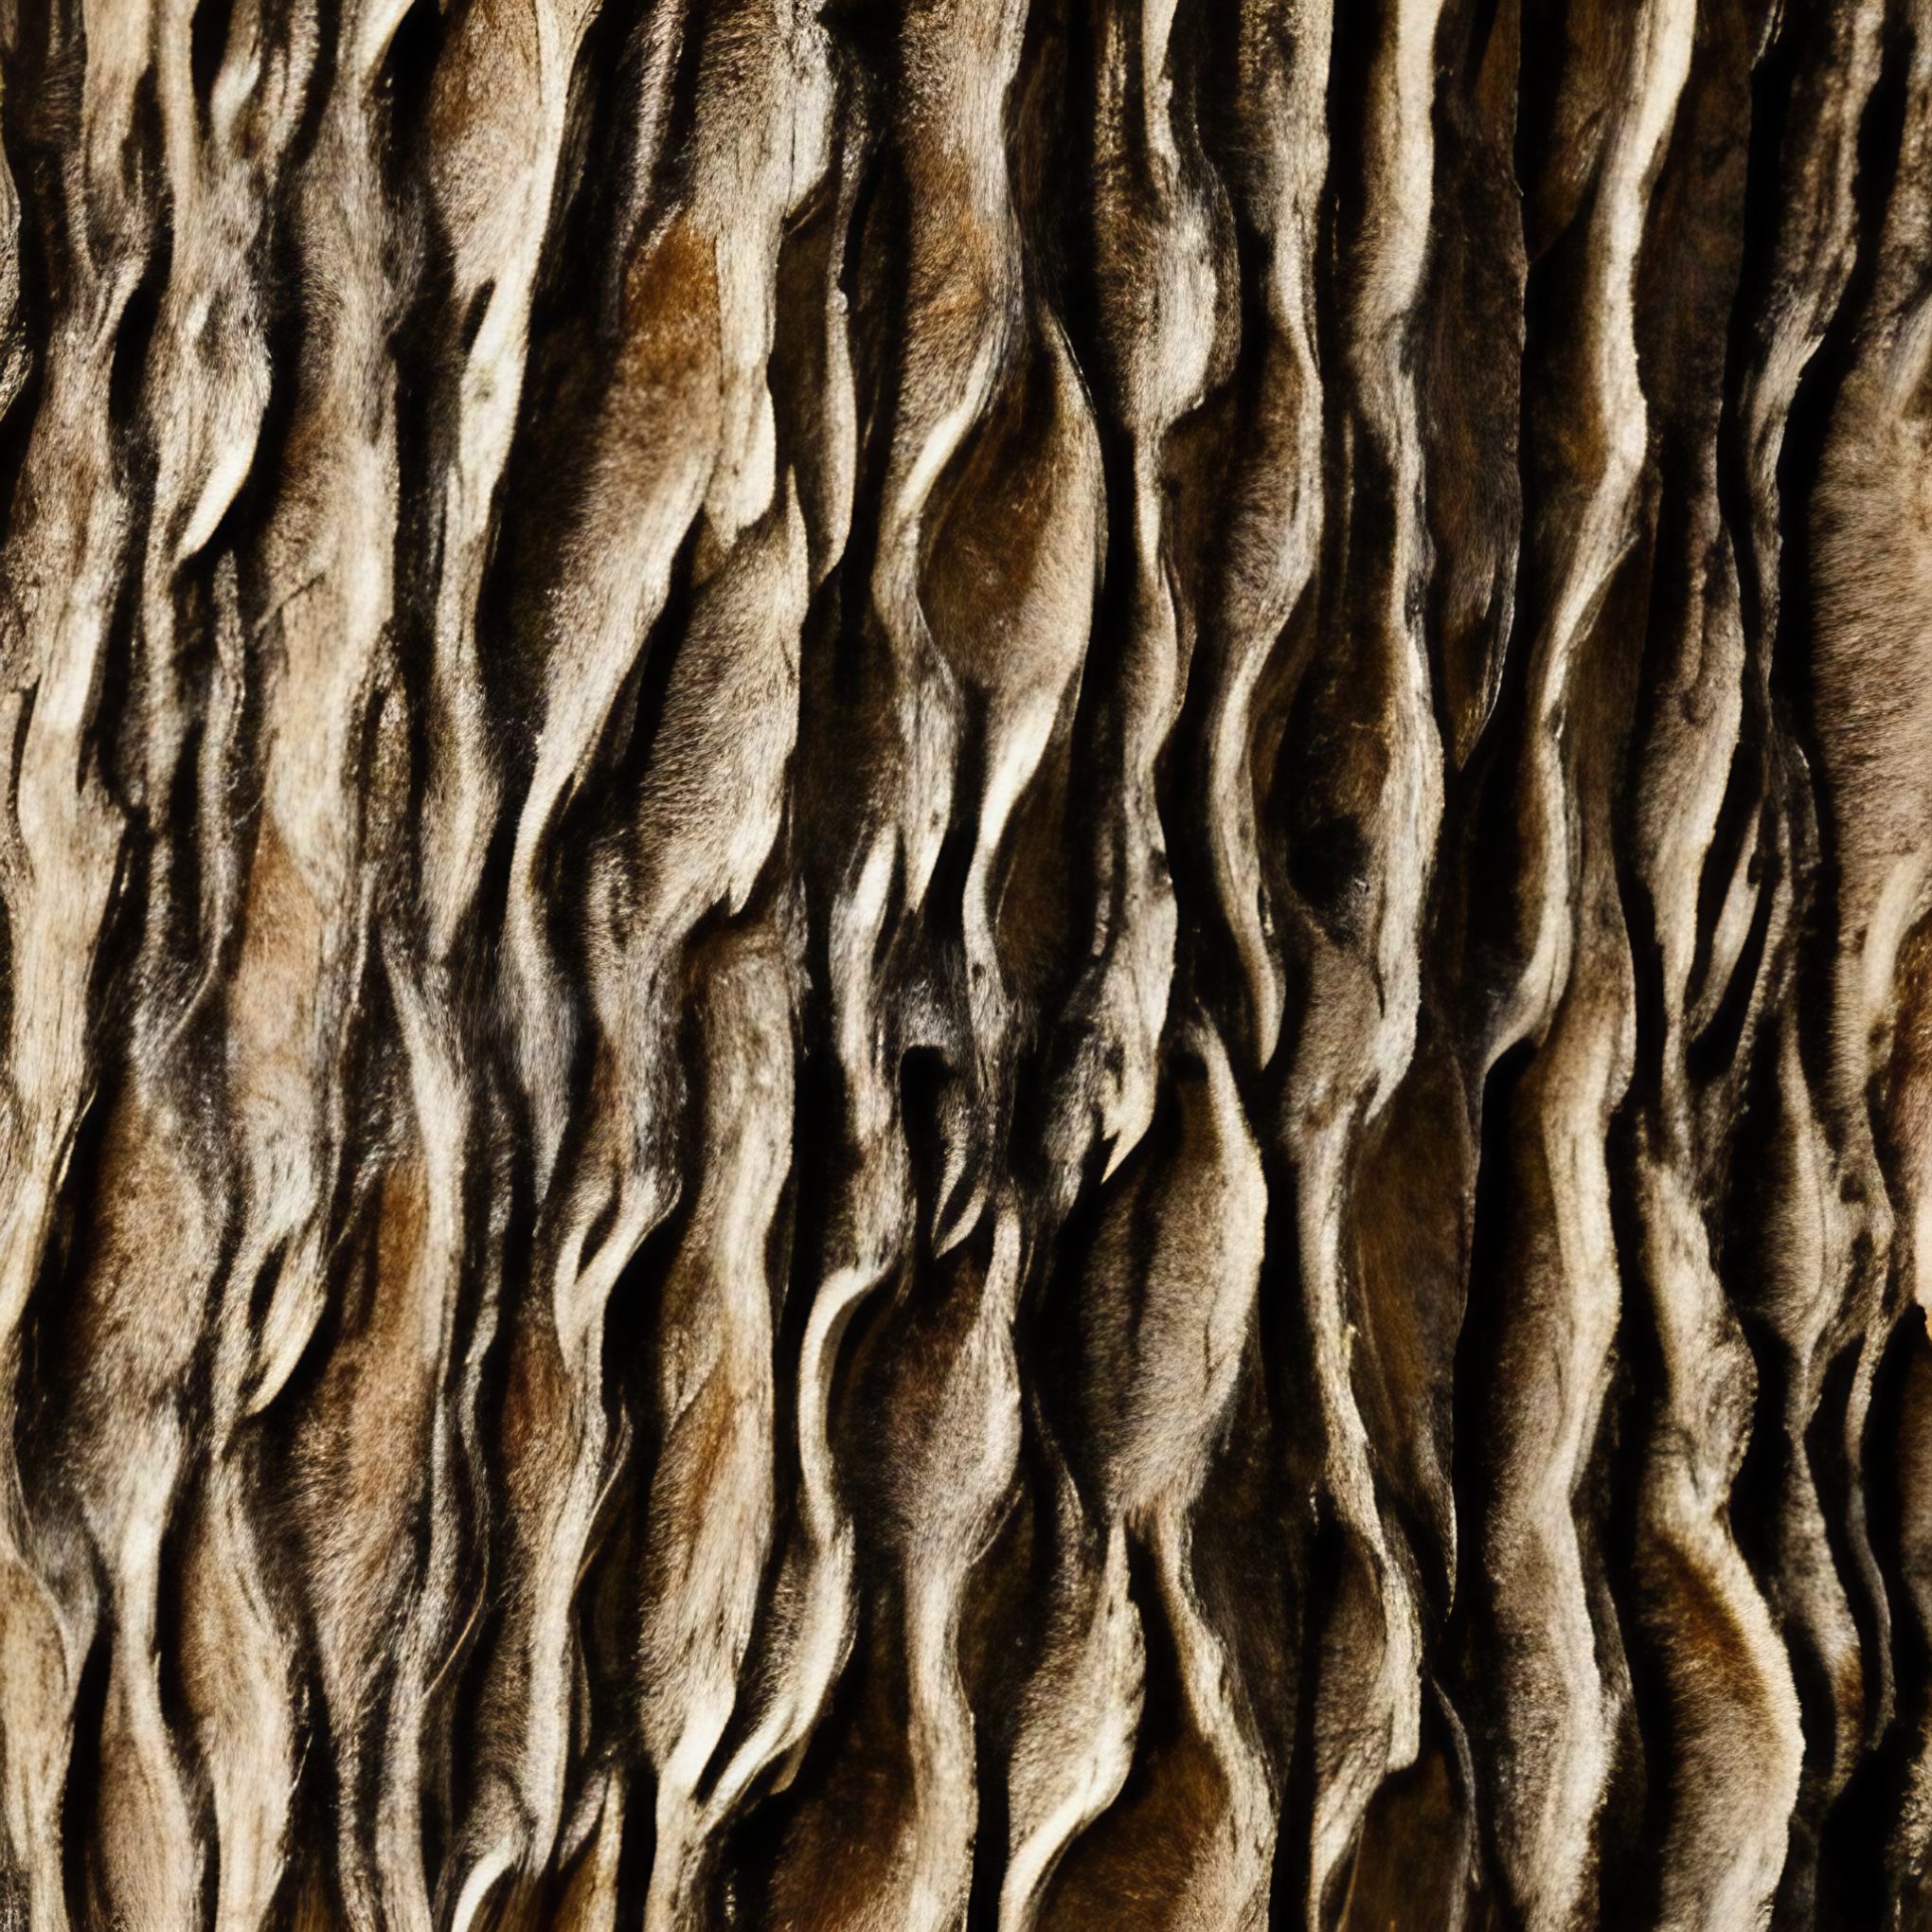 Oak Tree Bark Close Up Background Texture Free Stock Image